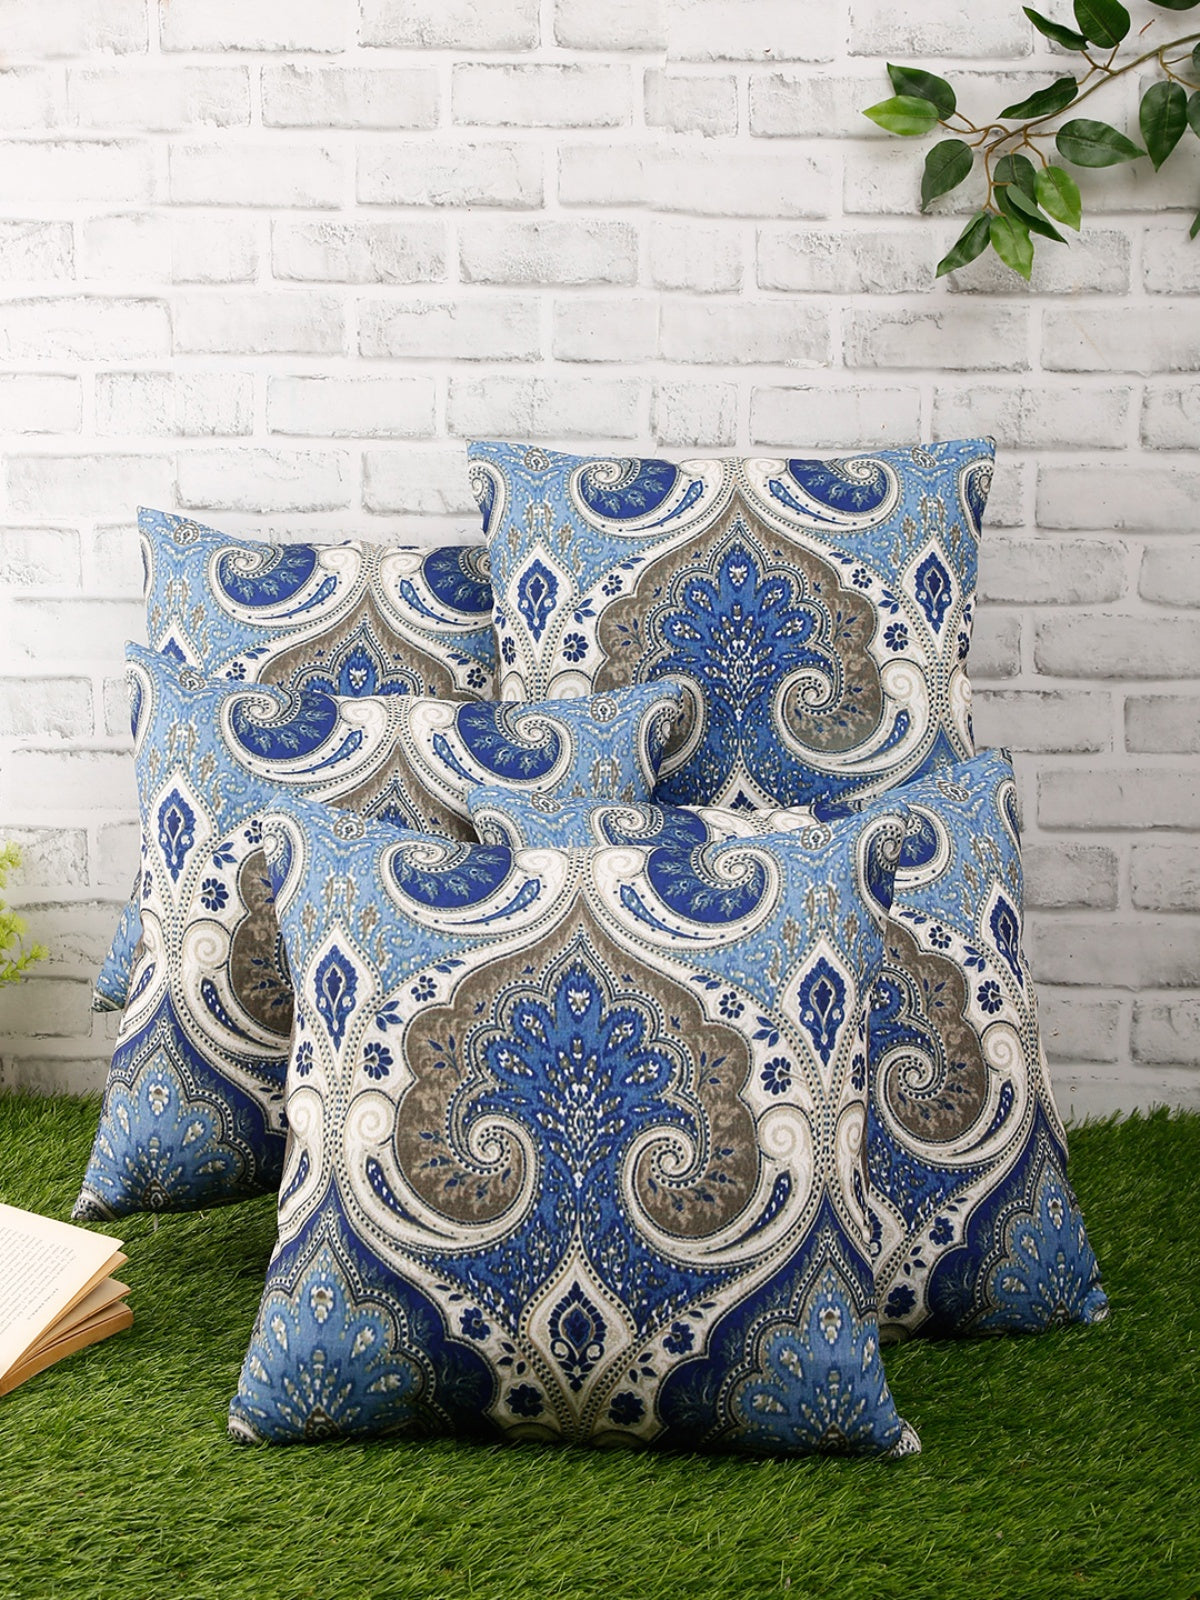 ROMEE Blue Ethnic Motifs Printed Cushion Covers Set of 5